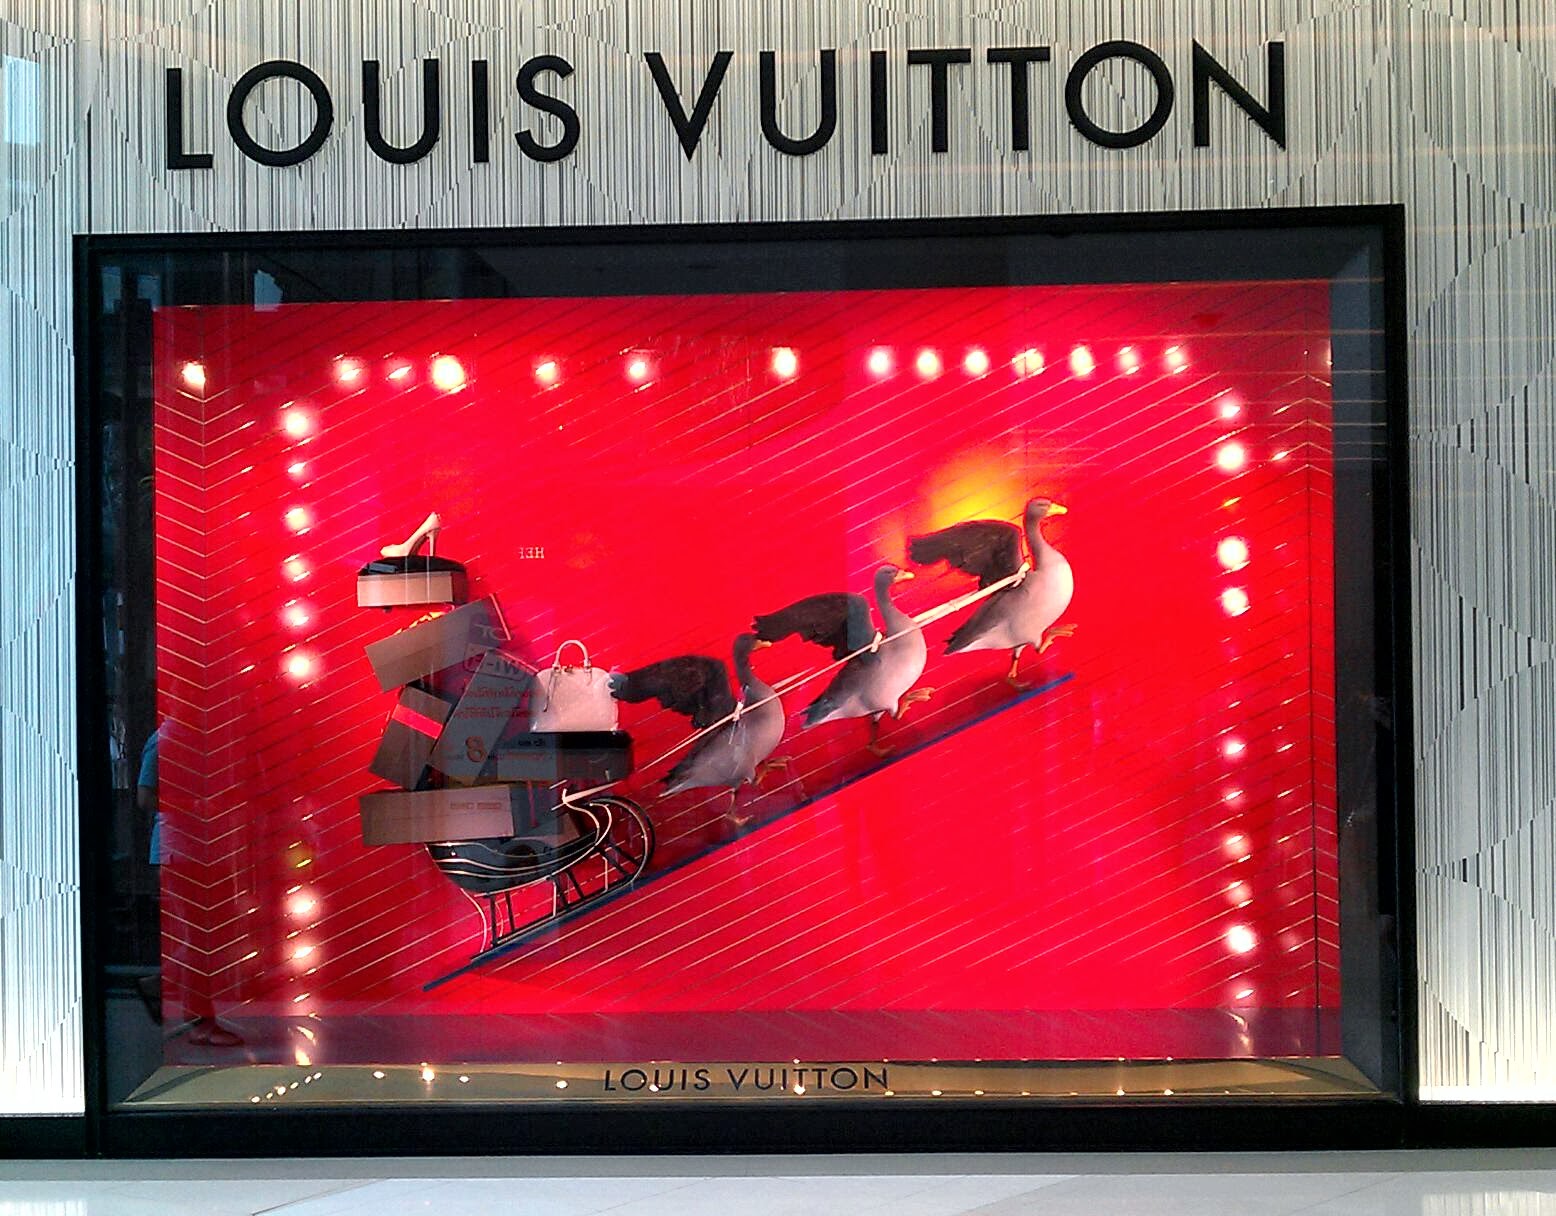 Louis Vuitton Christmas windows 2012, Vienna